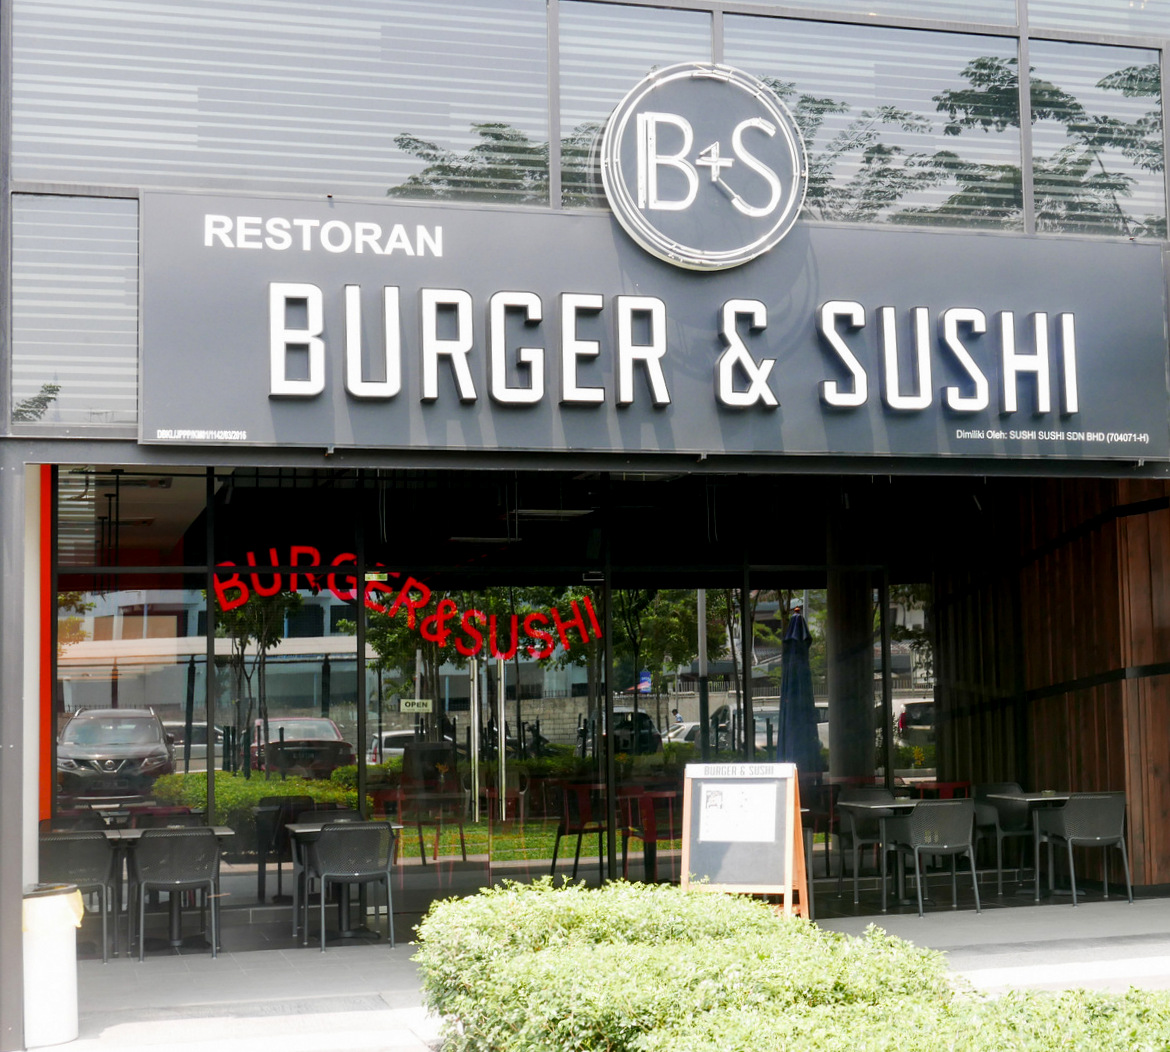 5. Burger & Sushi